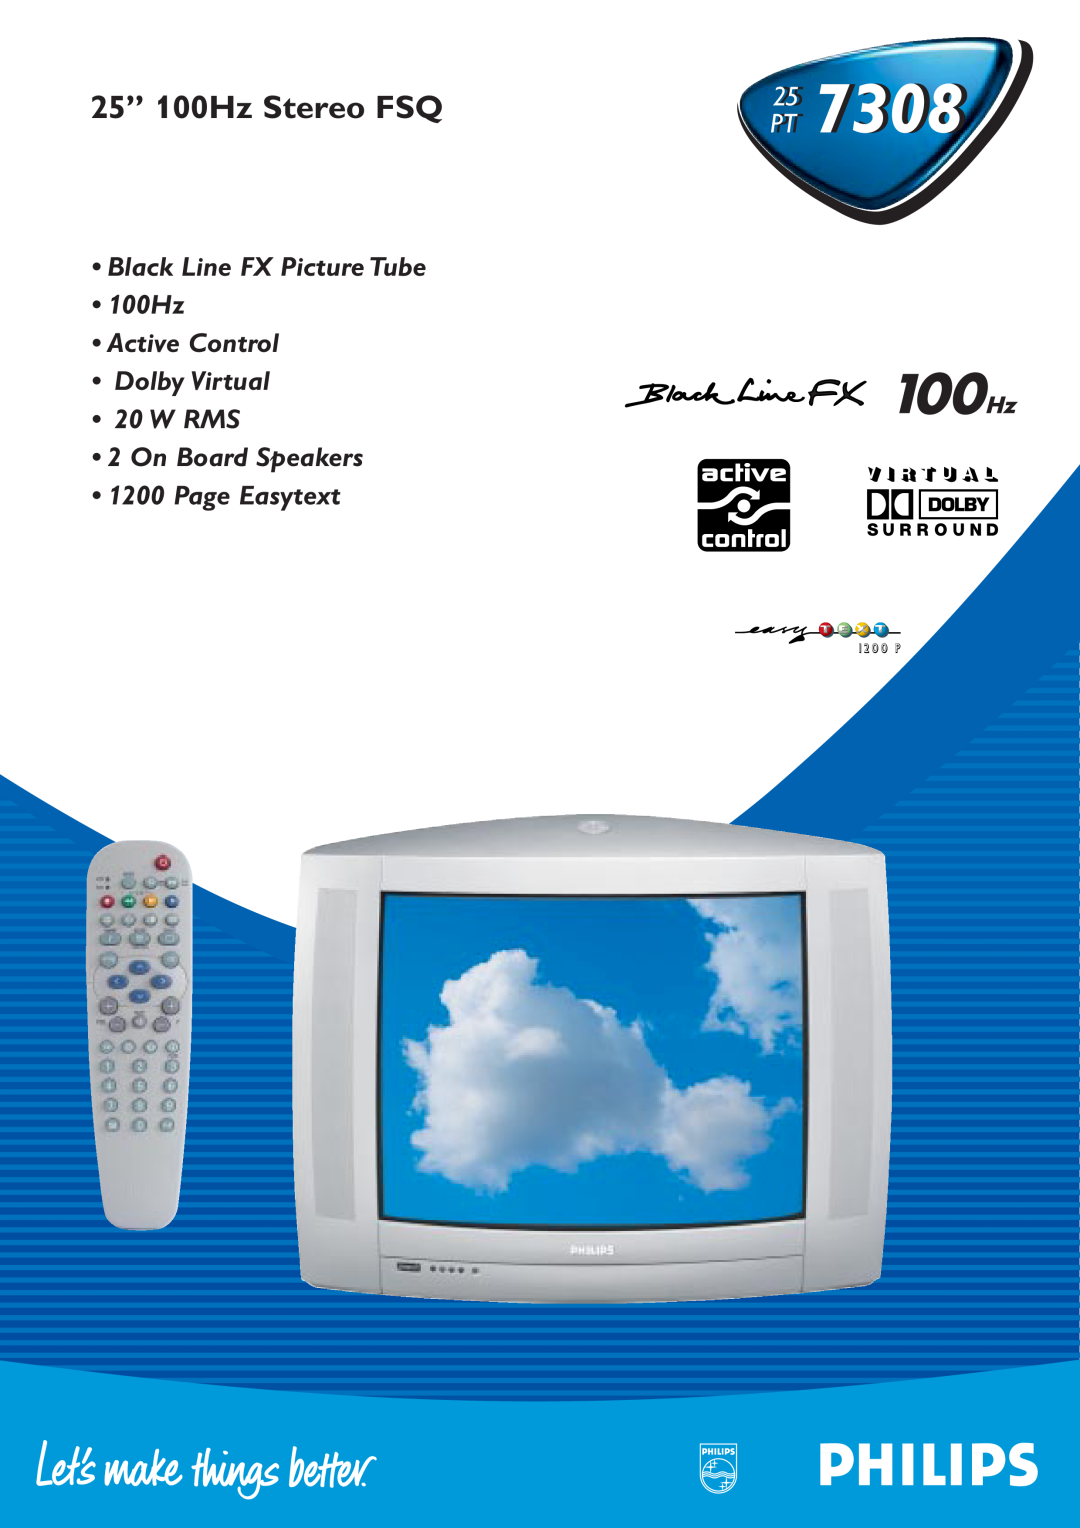 Philips 25PT7308 manual 25” 100Hz Stereo FSQ, Pt Pt, Black Line FX Picture Tube 100Hz Active Control Dolby Virtual 